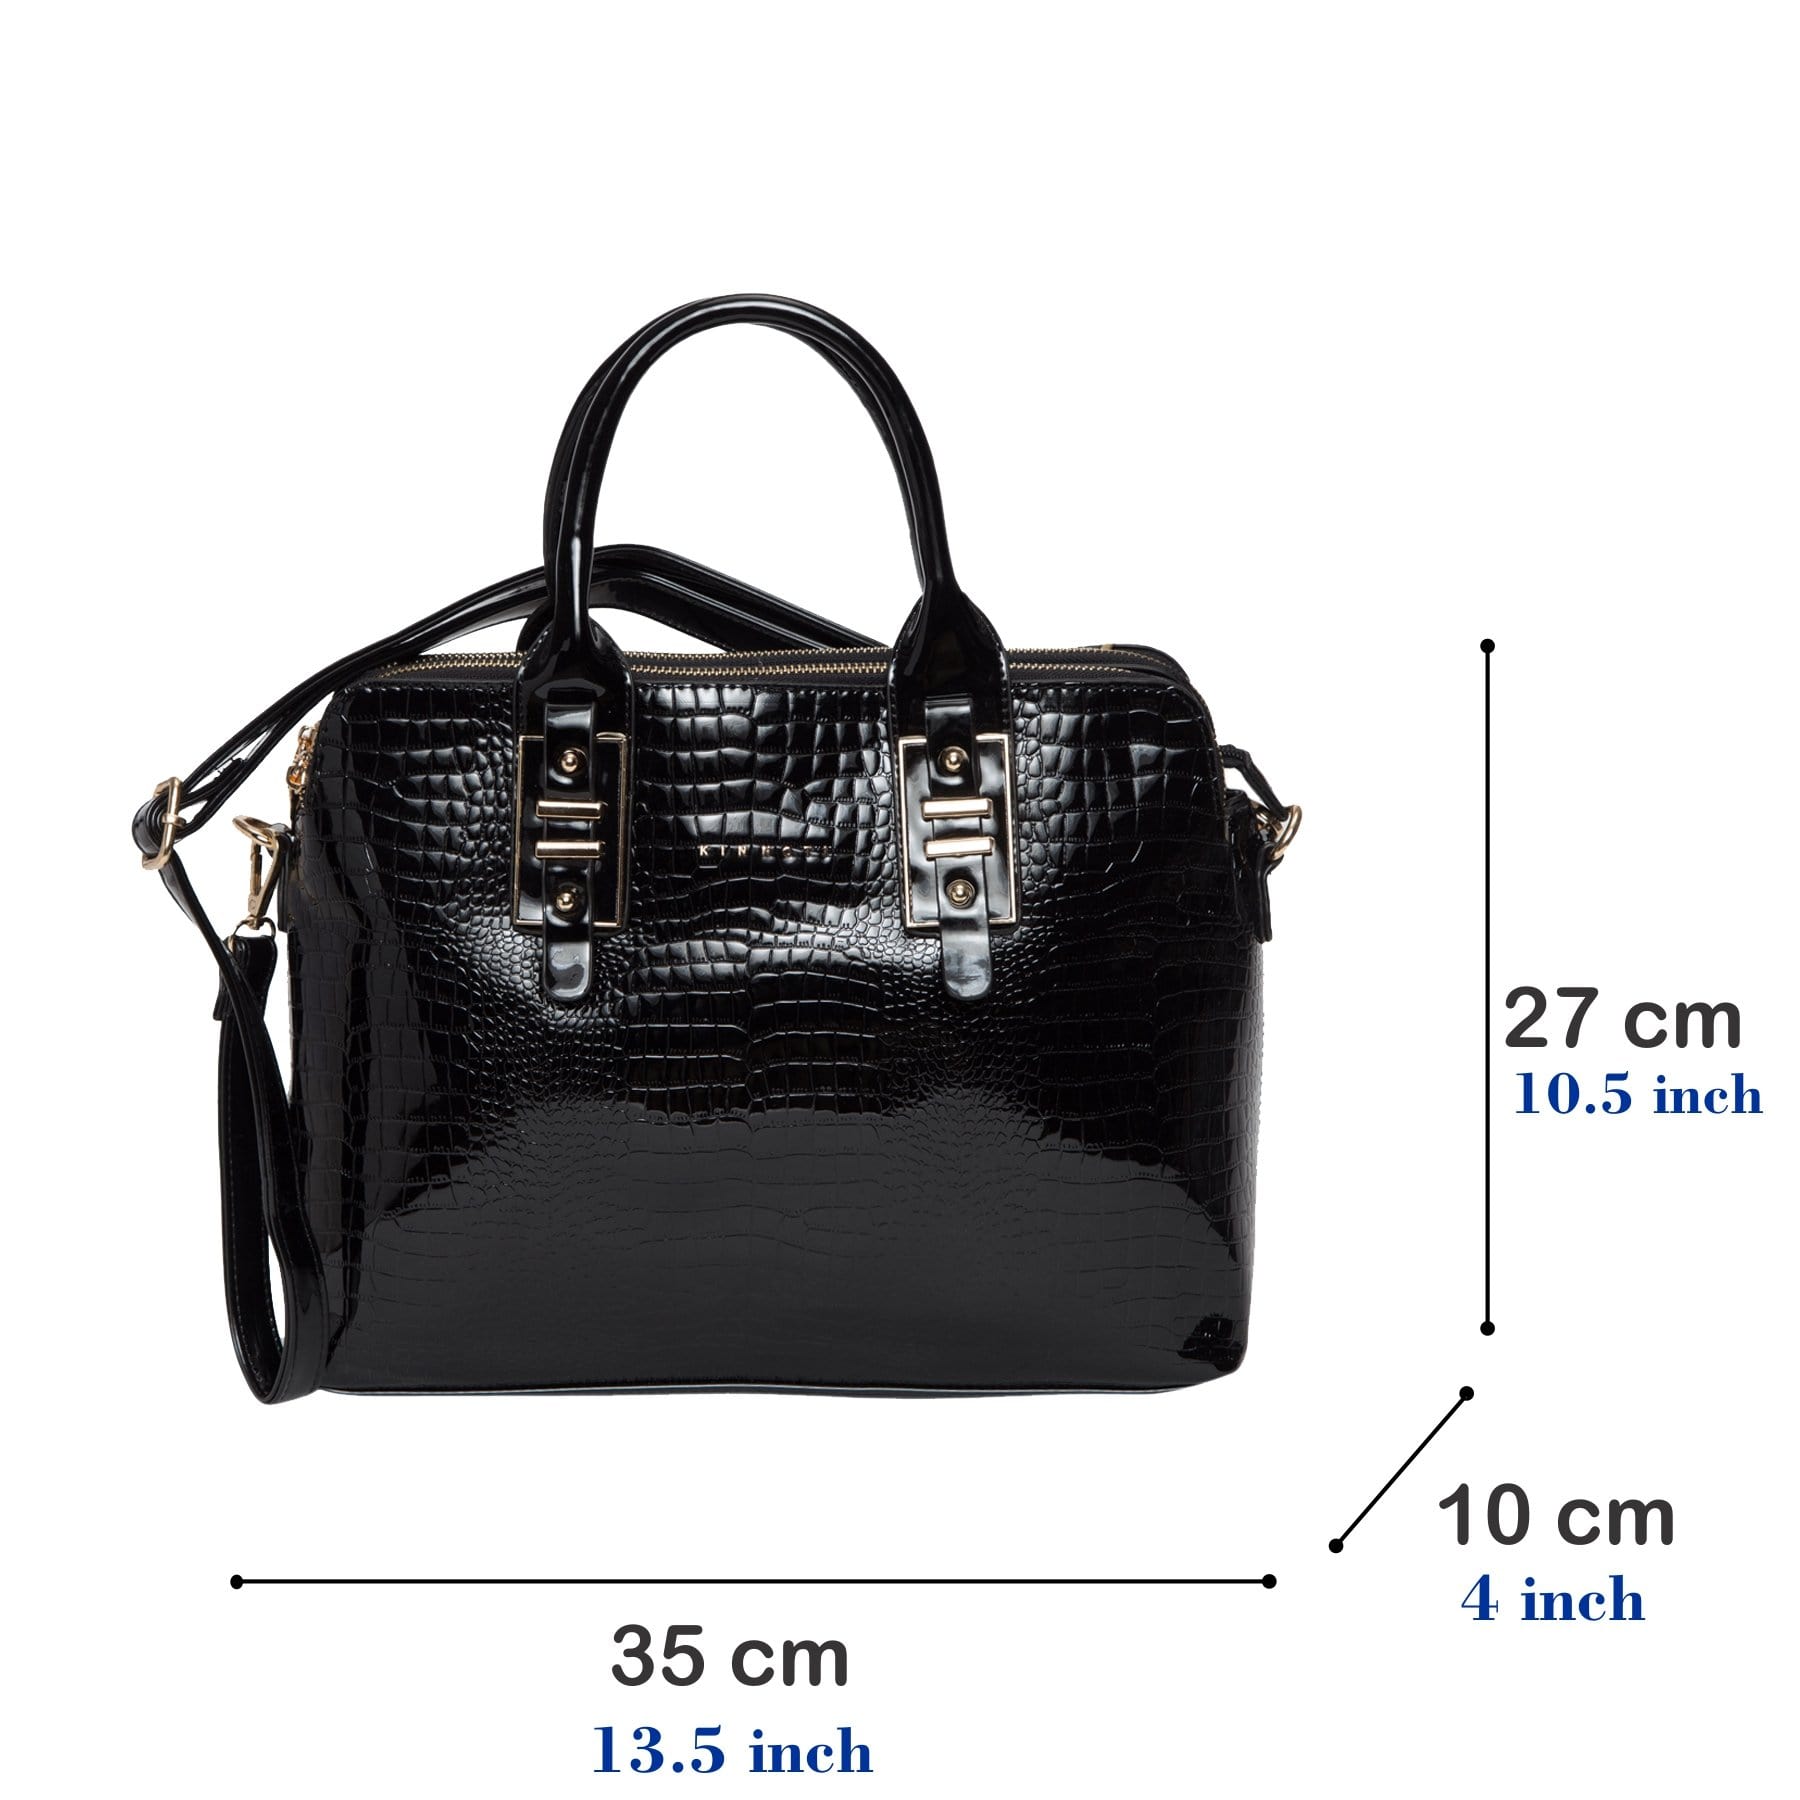 KINNOTI Handbags Black Satchel Handbag